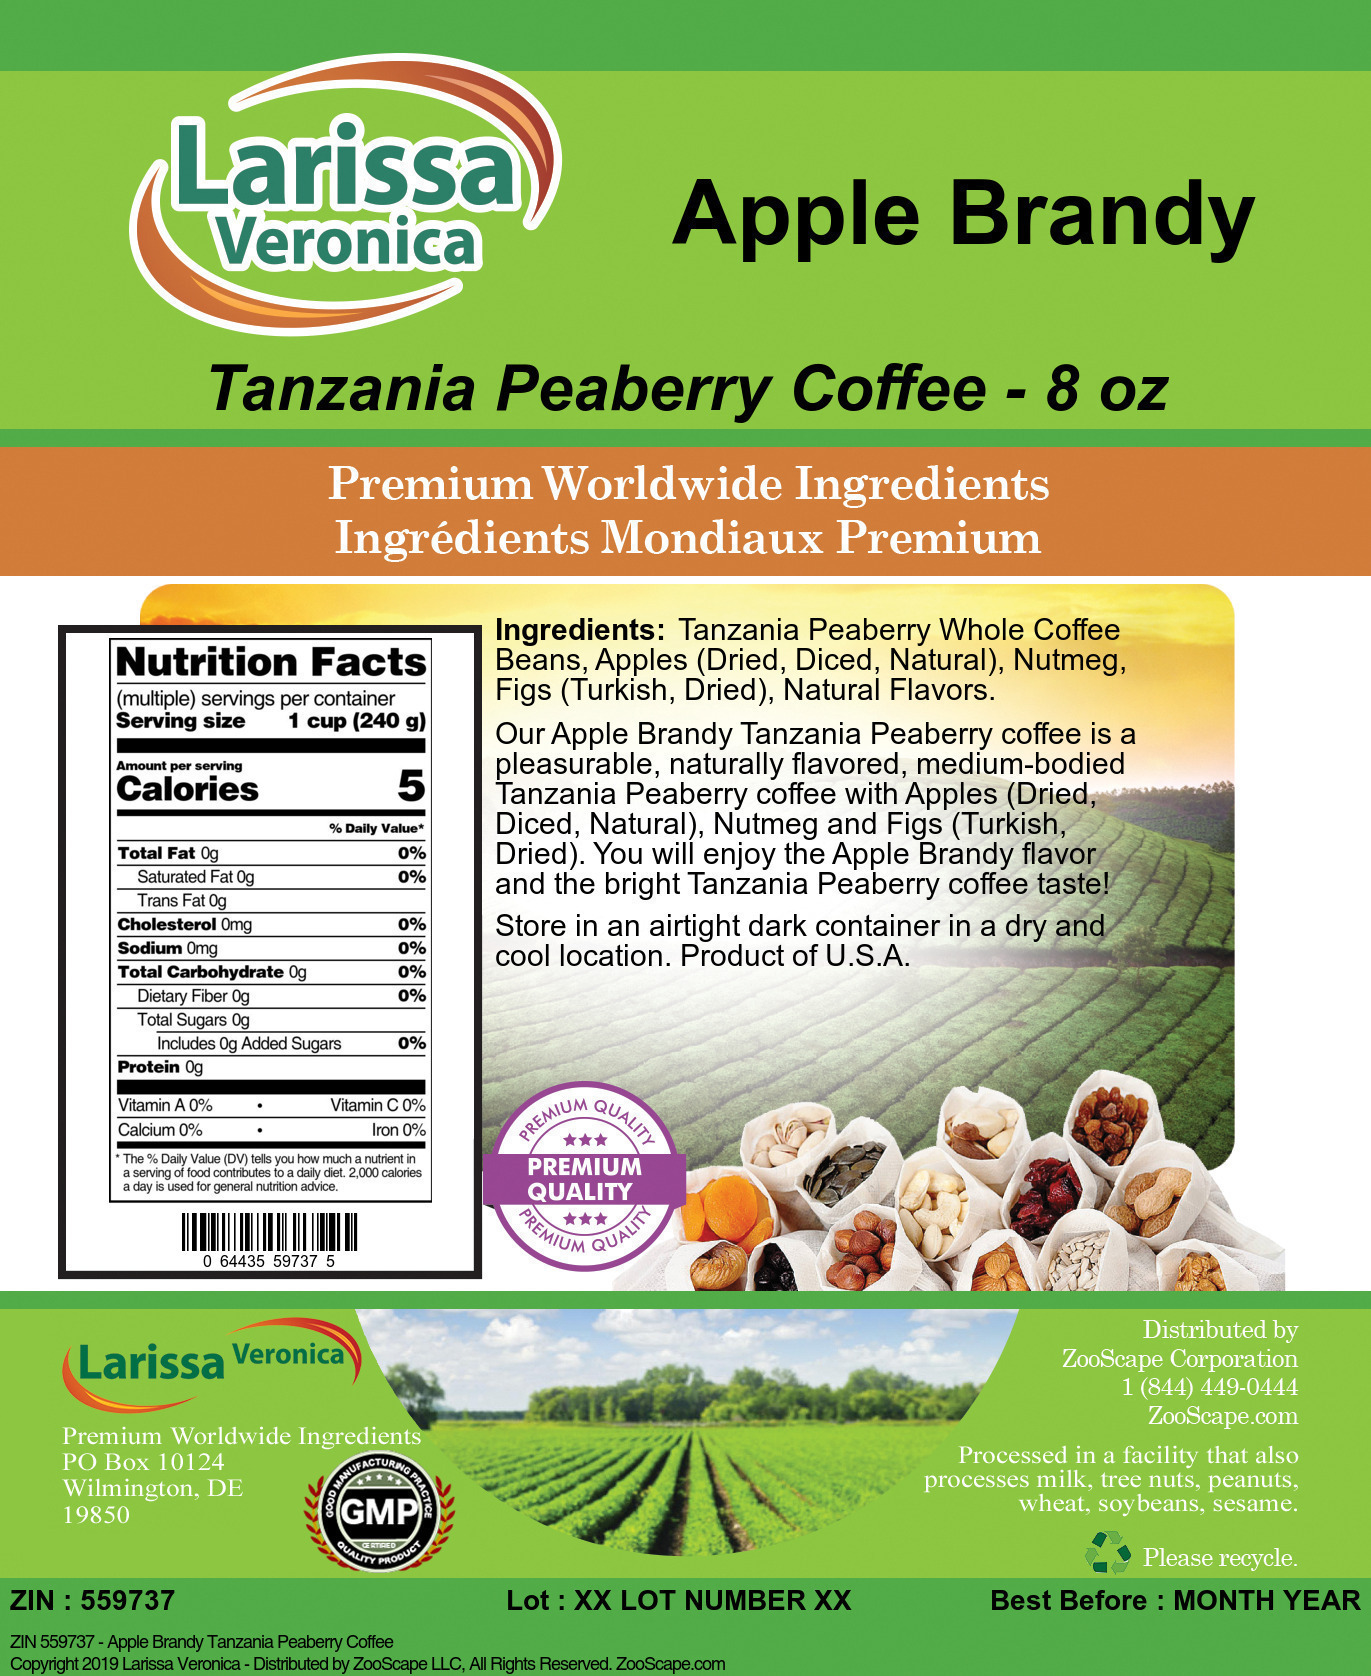 Apple Brandy Tanzania Peaberry Coffee - Label